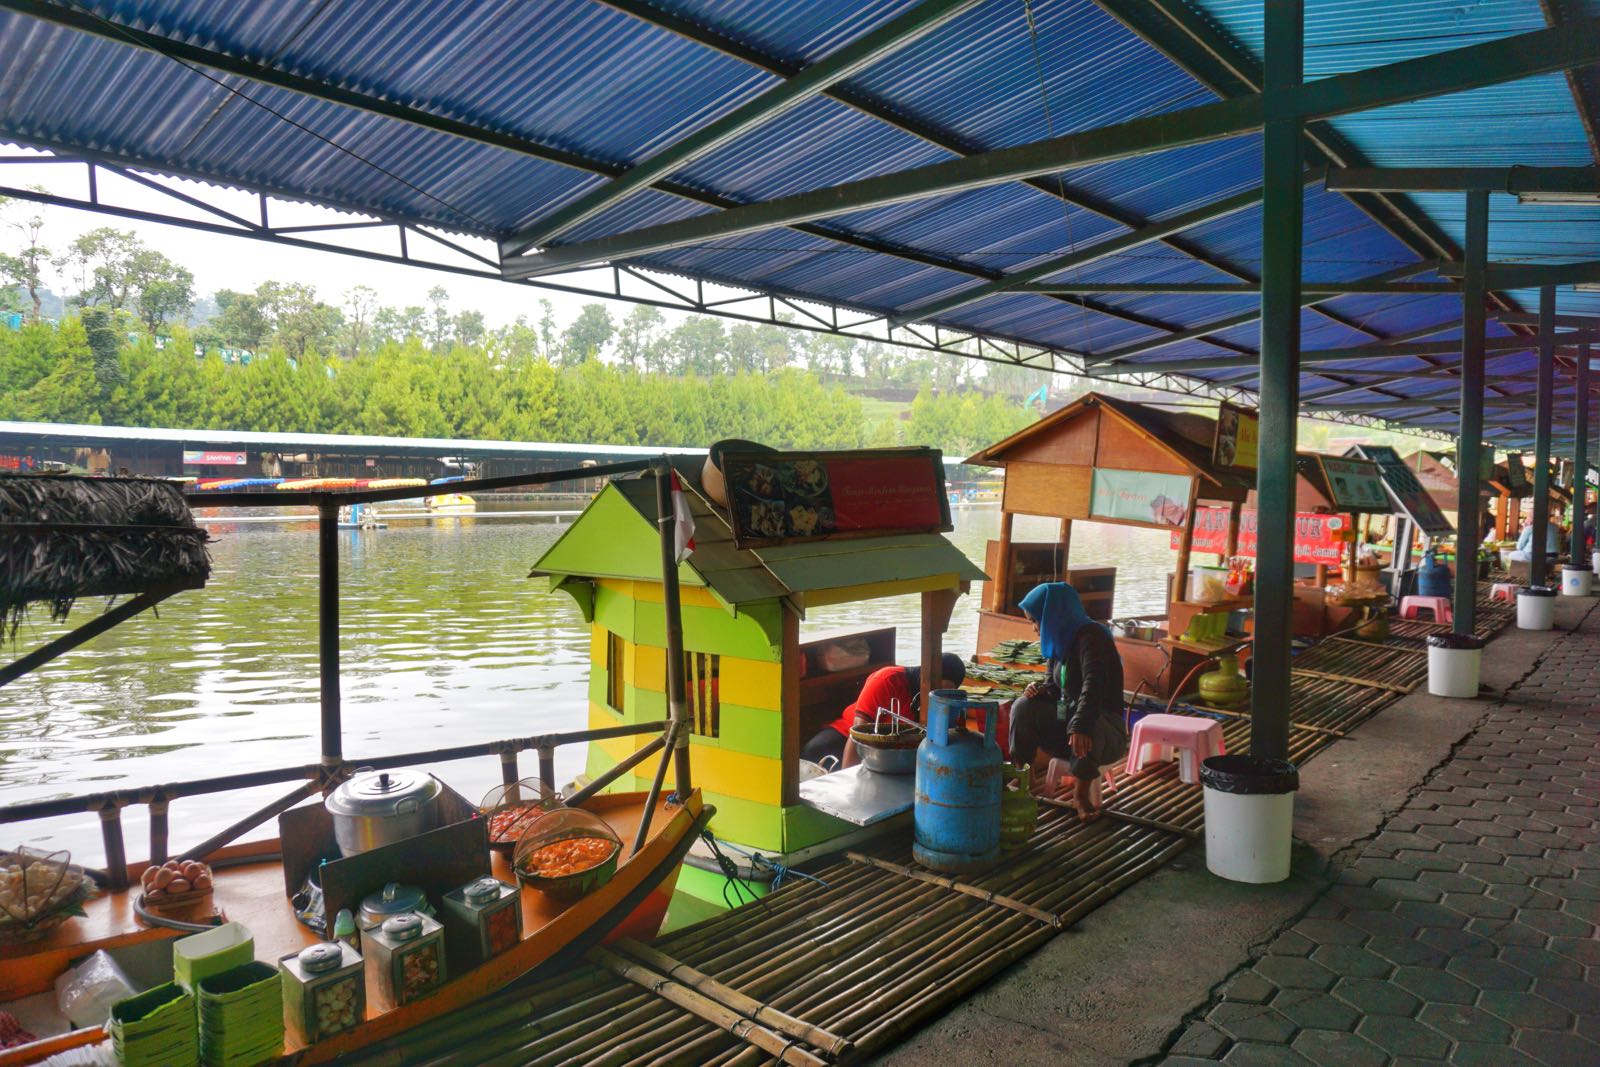 Floating Market, Lembang - PergiDulu.com